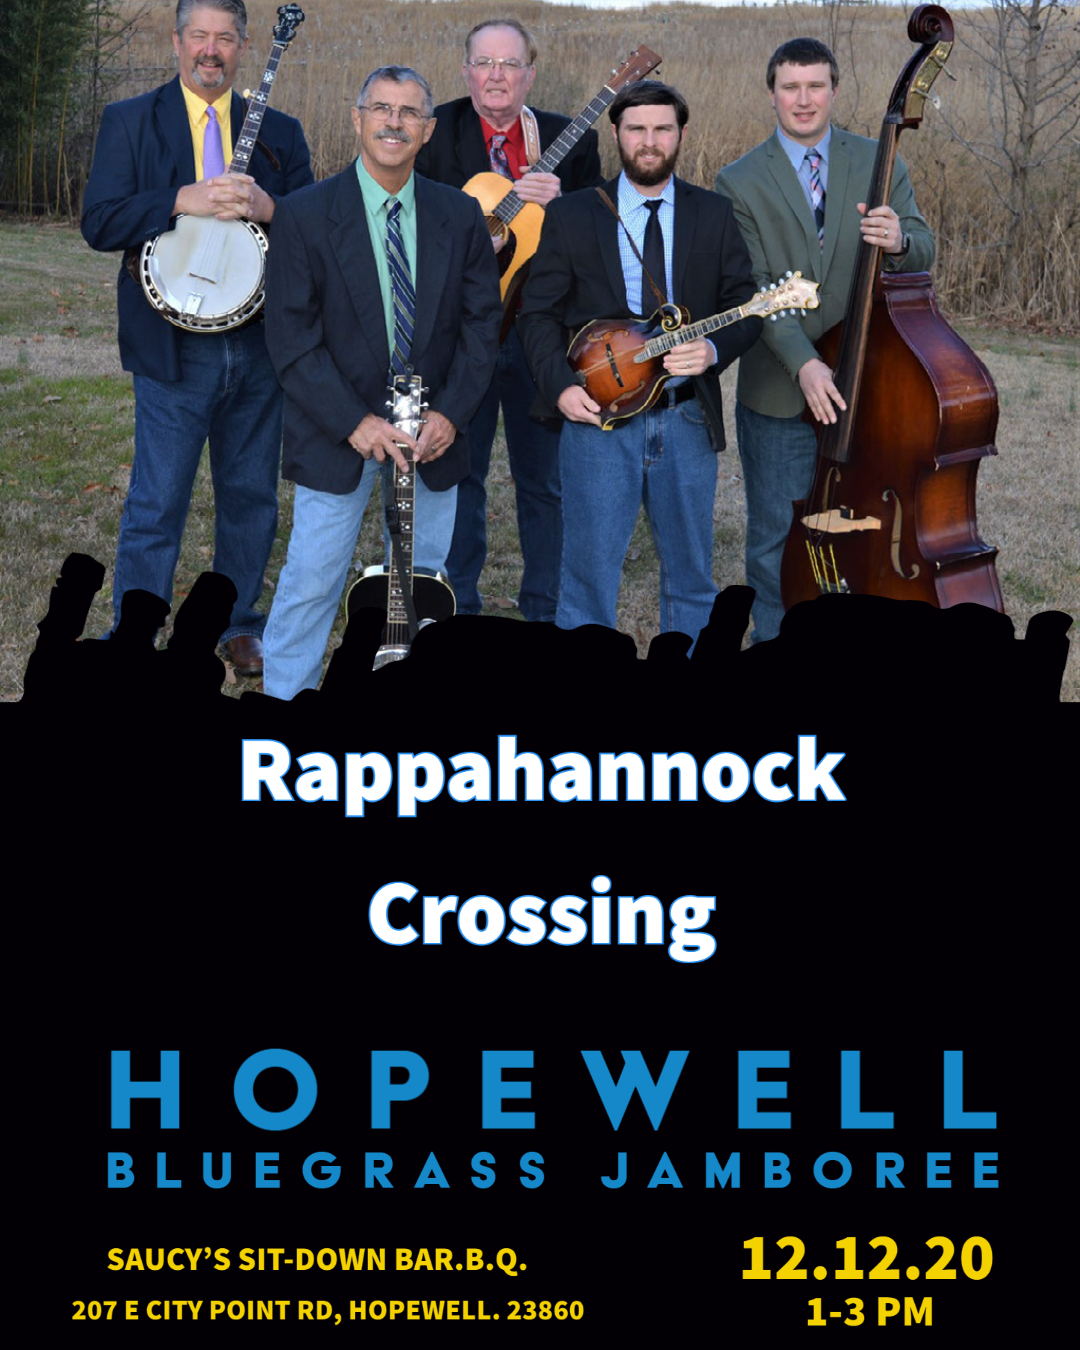 Hopewell Bluegrass Jamboree